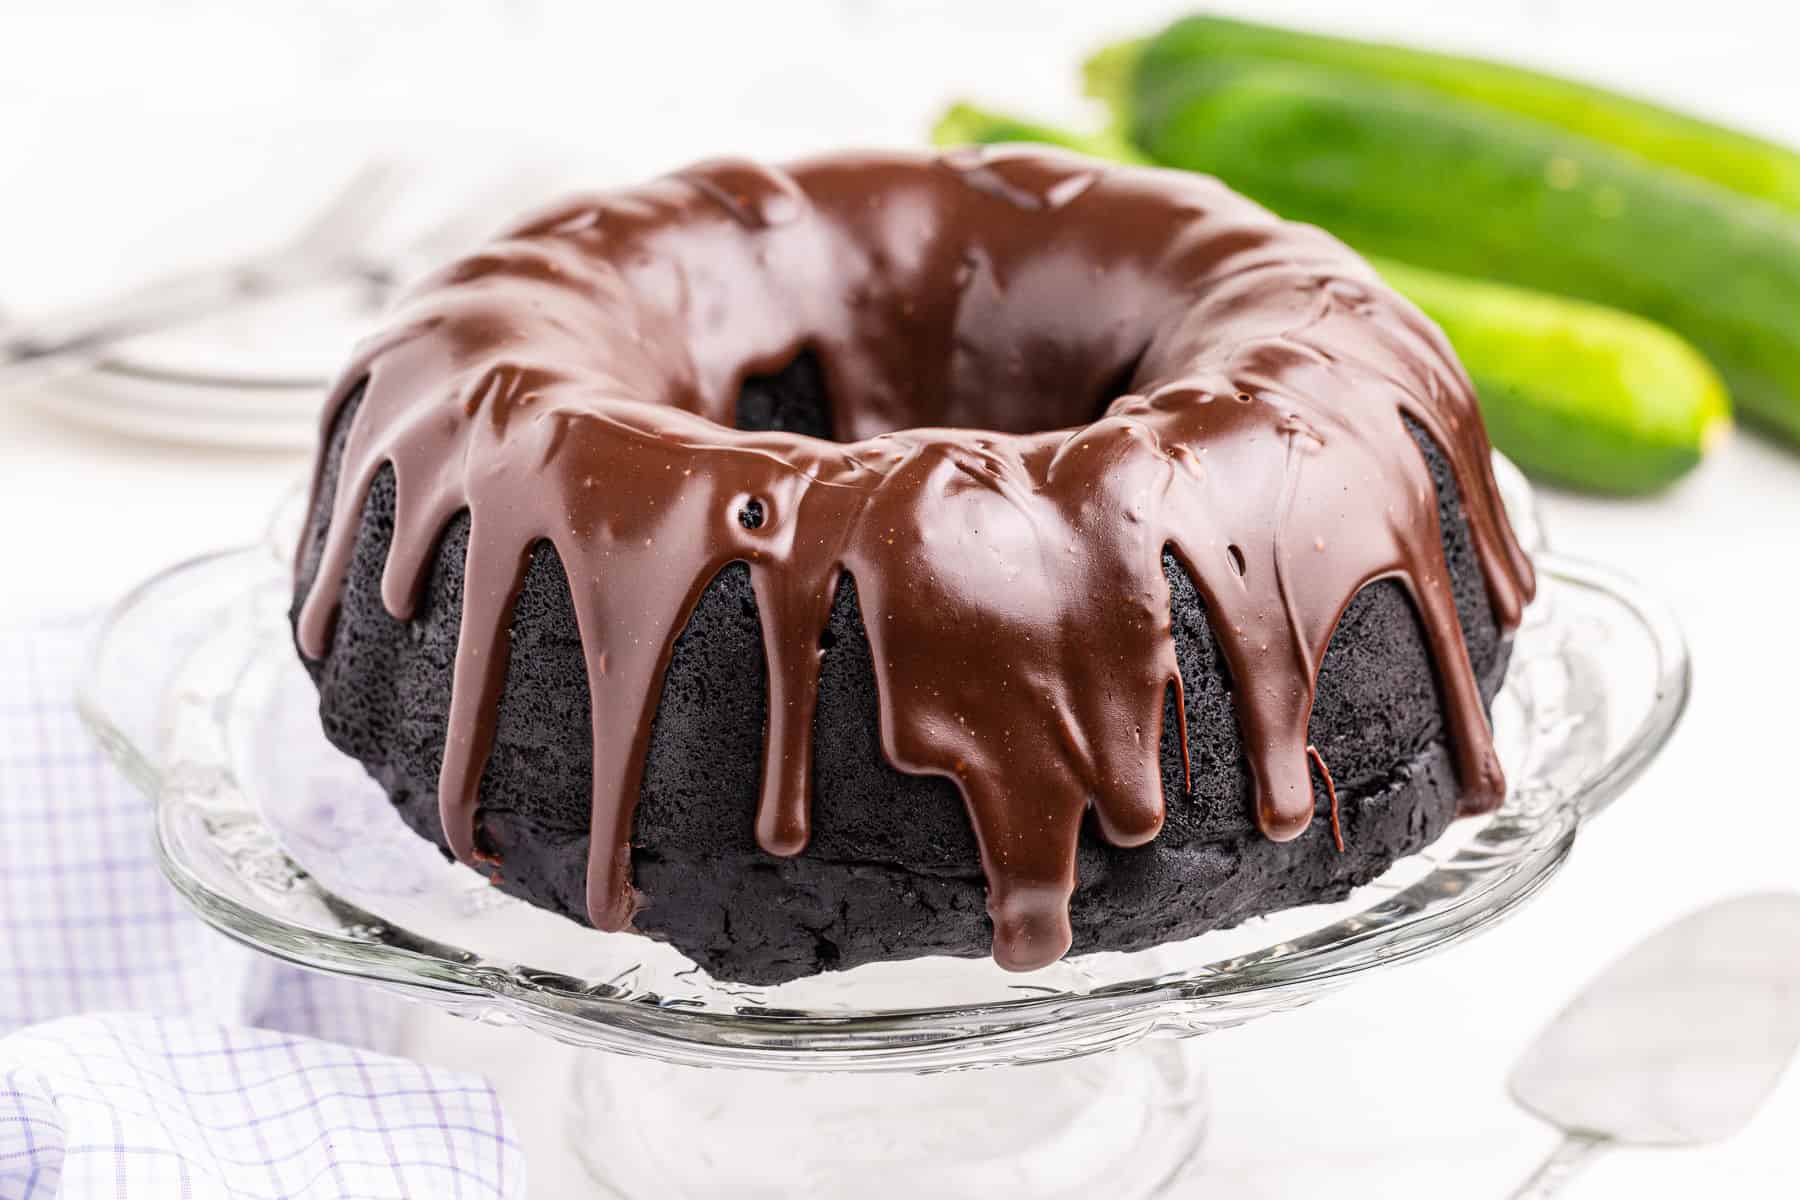 https://www.shugarysweets.com/wp-content/uploads/2014/08/chocolate-zucchini-cake-facebook.jpg